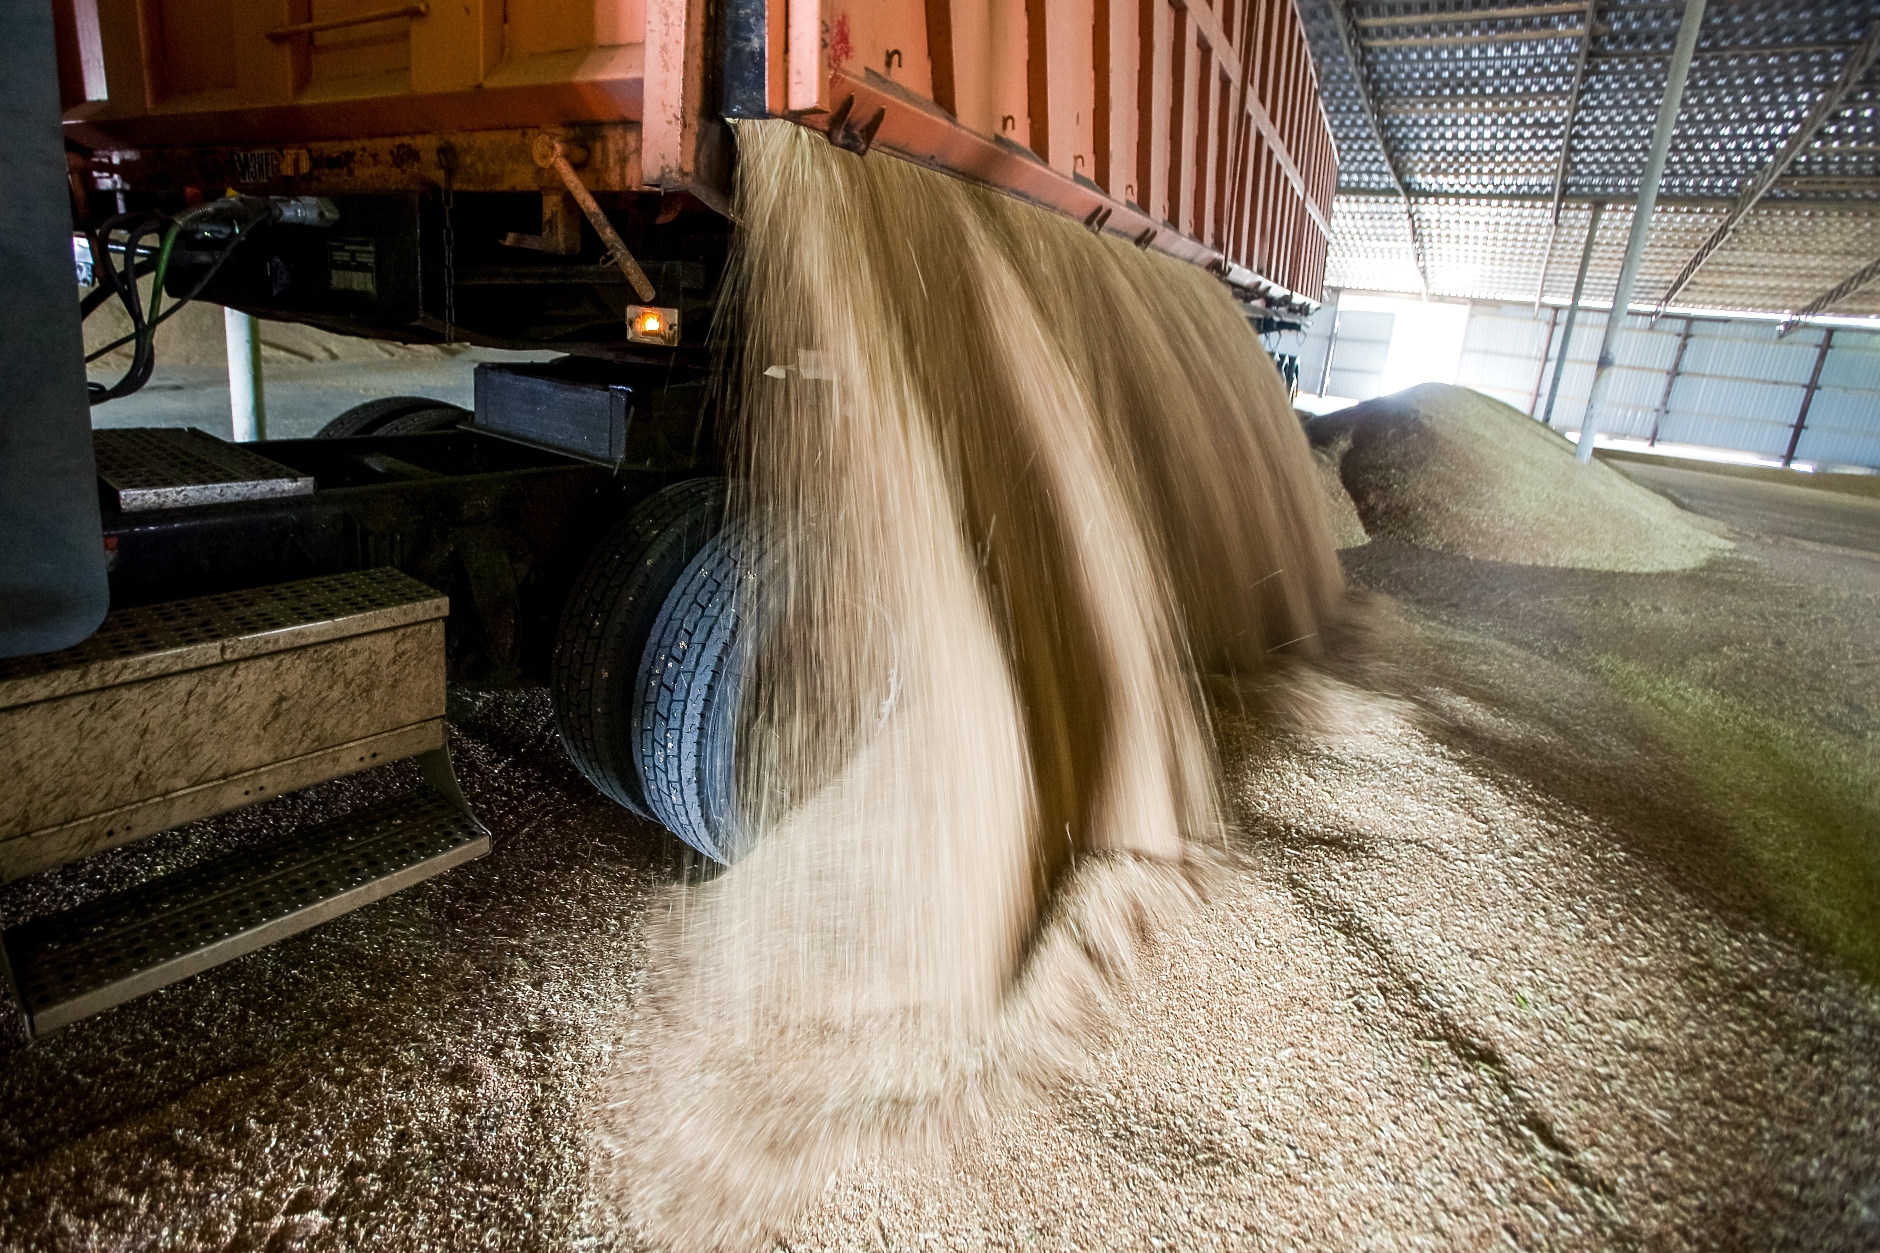 Пшеницата поскъпна с близо  5 на сто след руски атаки срещу украински пристанища 